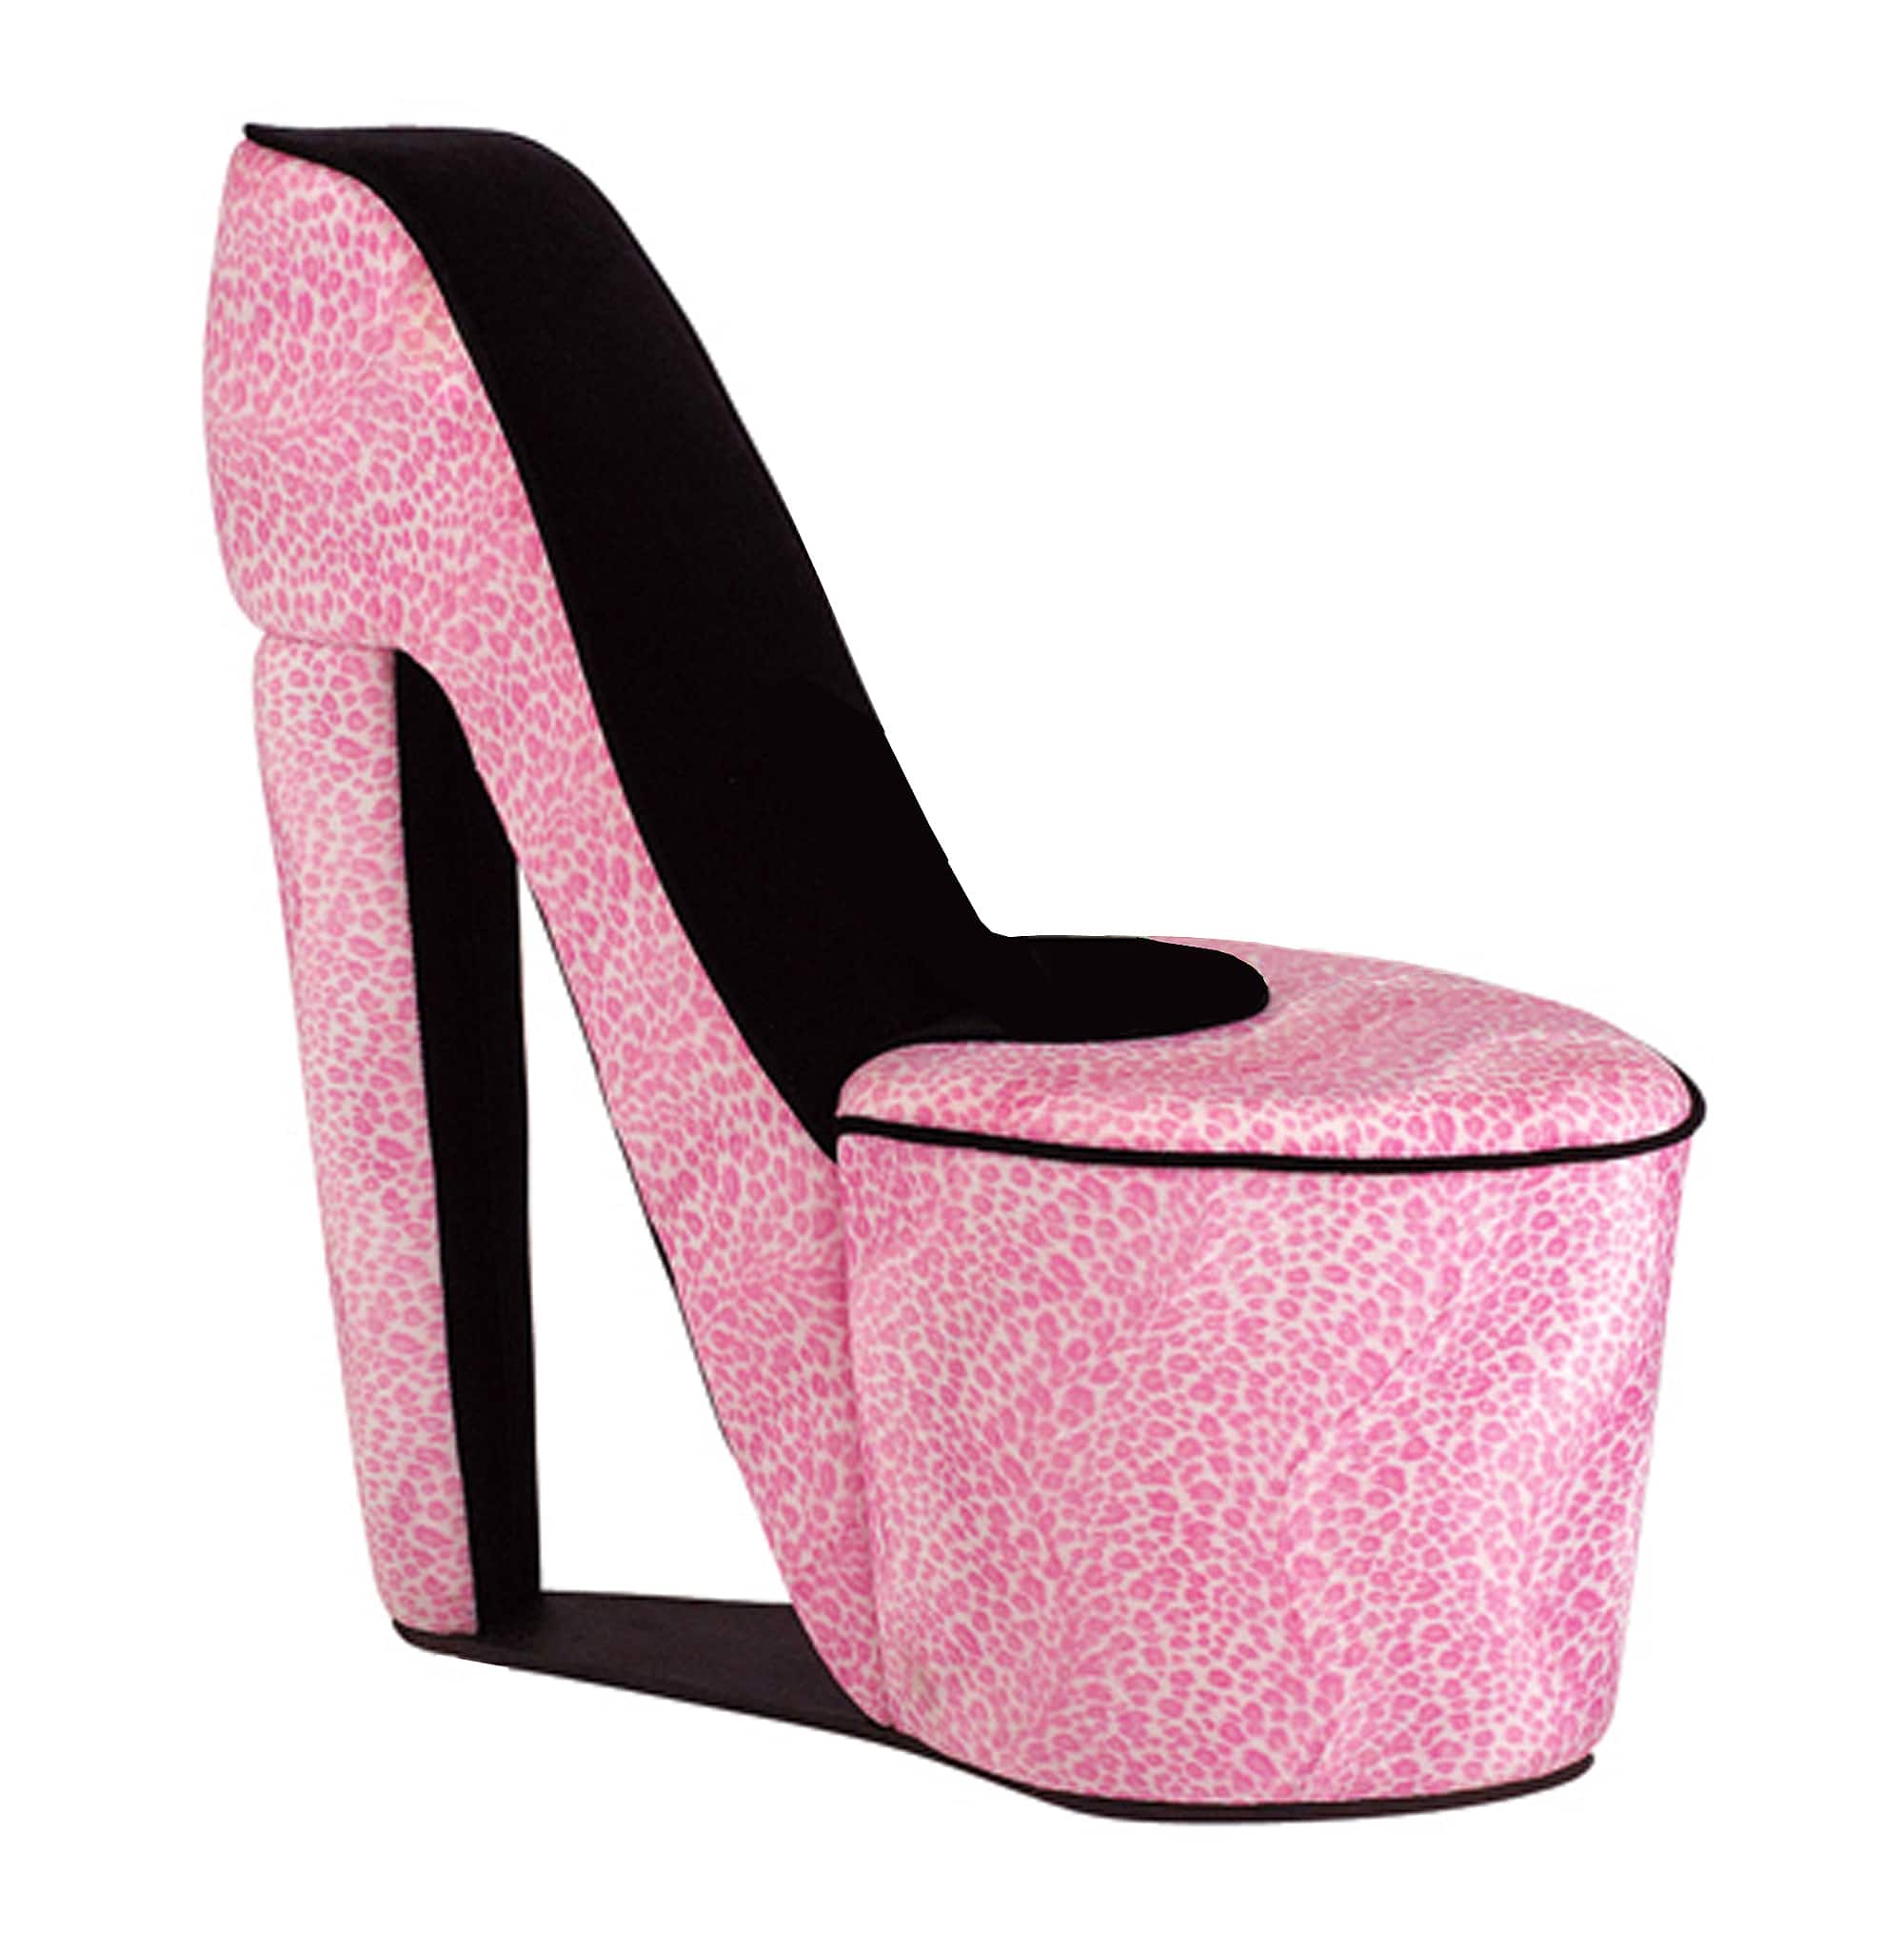 Pink High Heel Chair - Diy chair sofa chair quality furniture cool ...